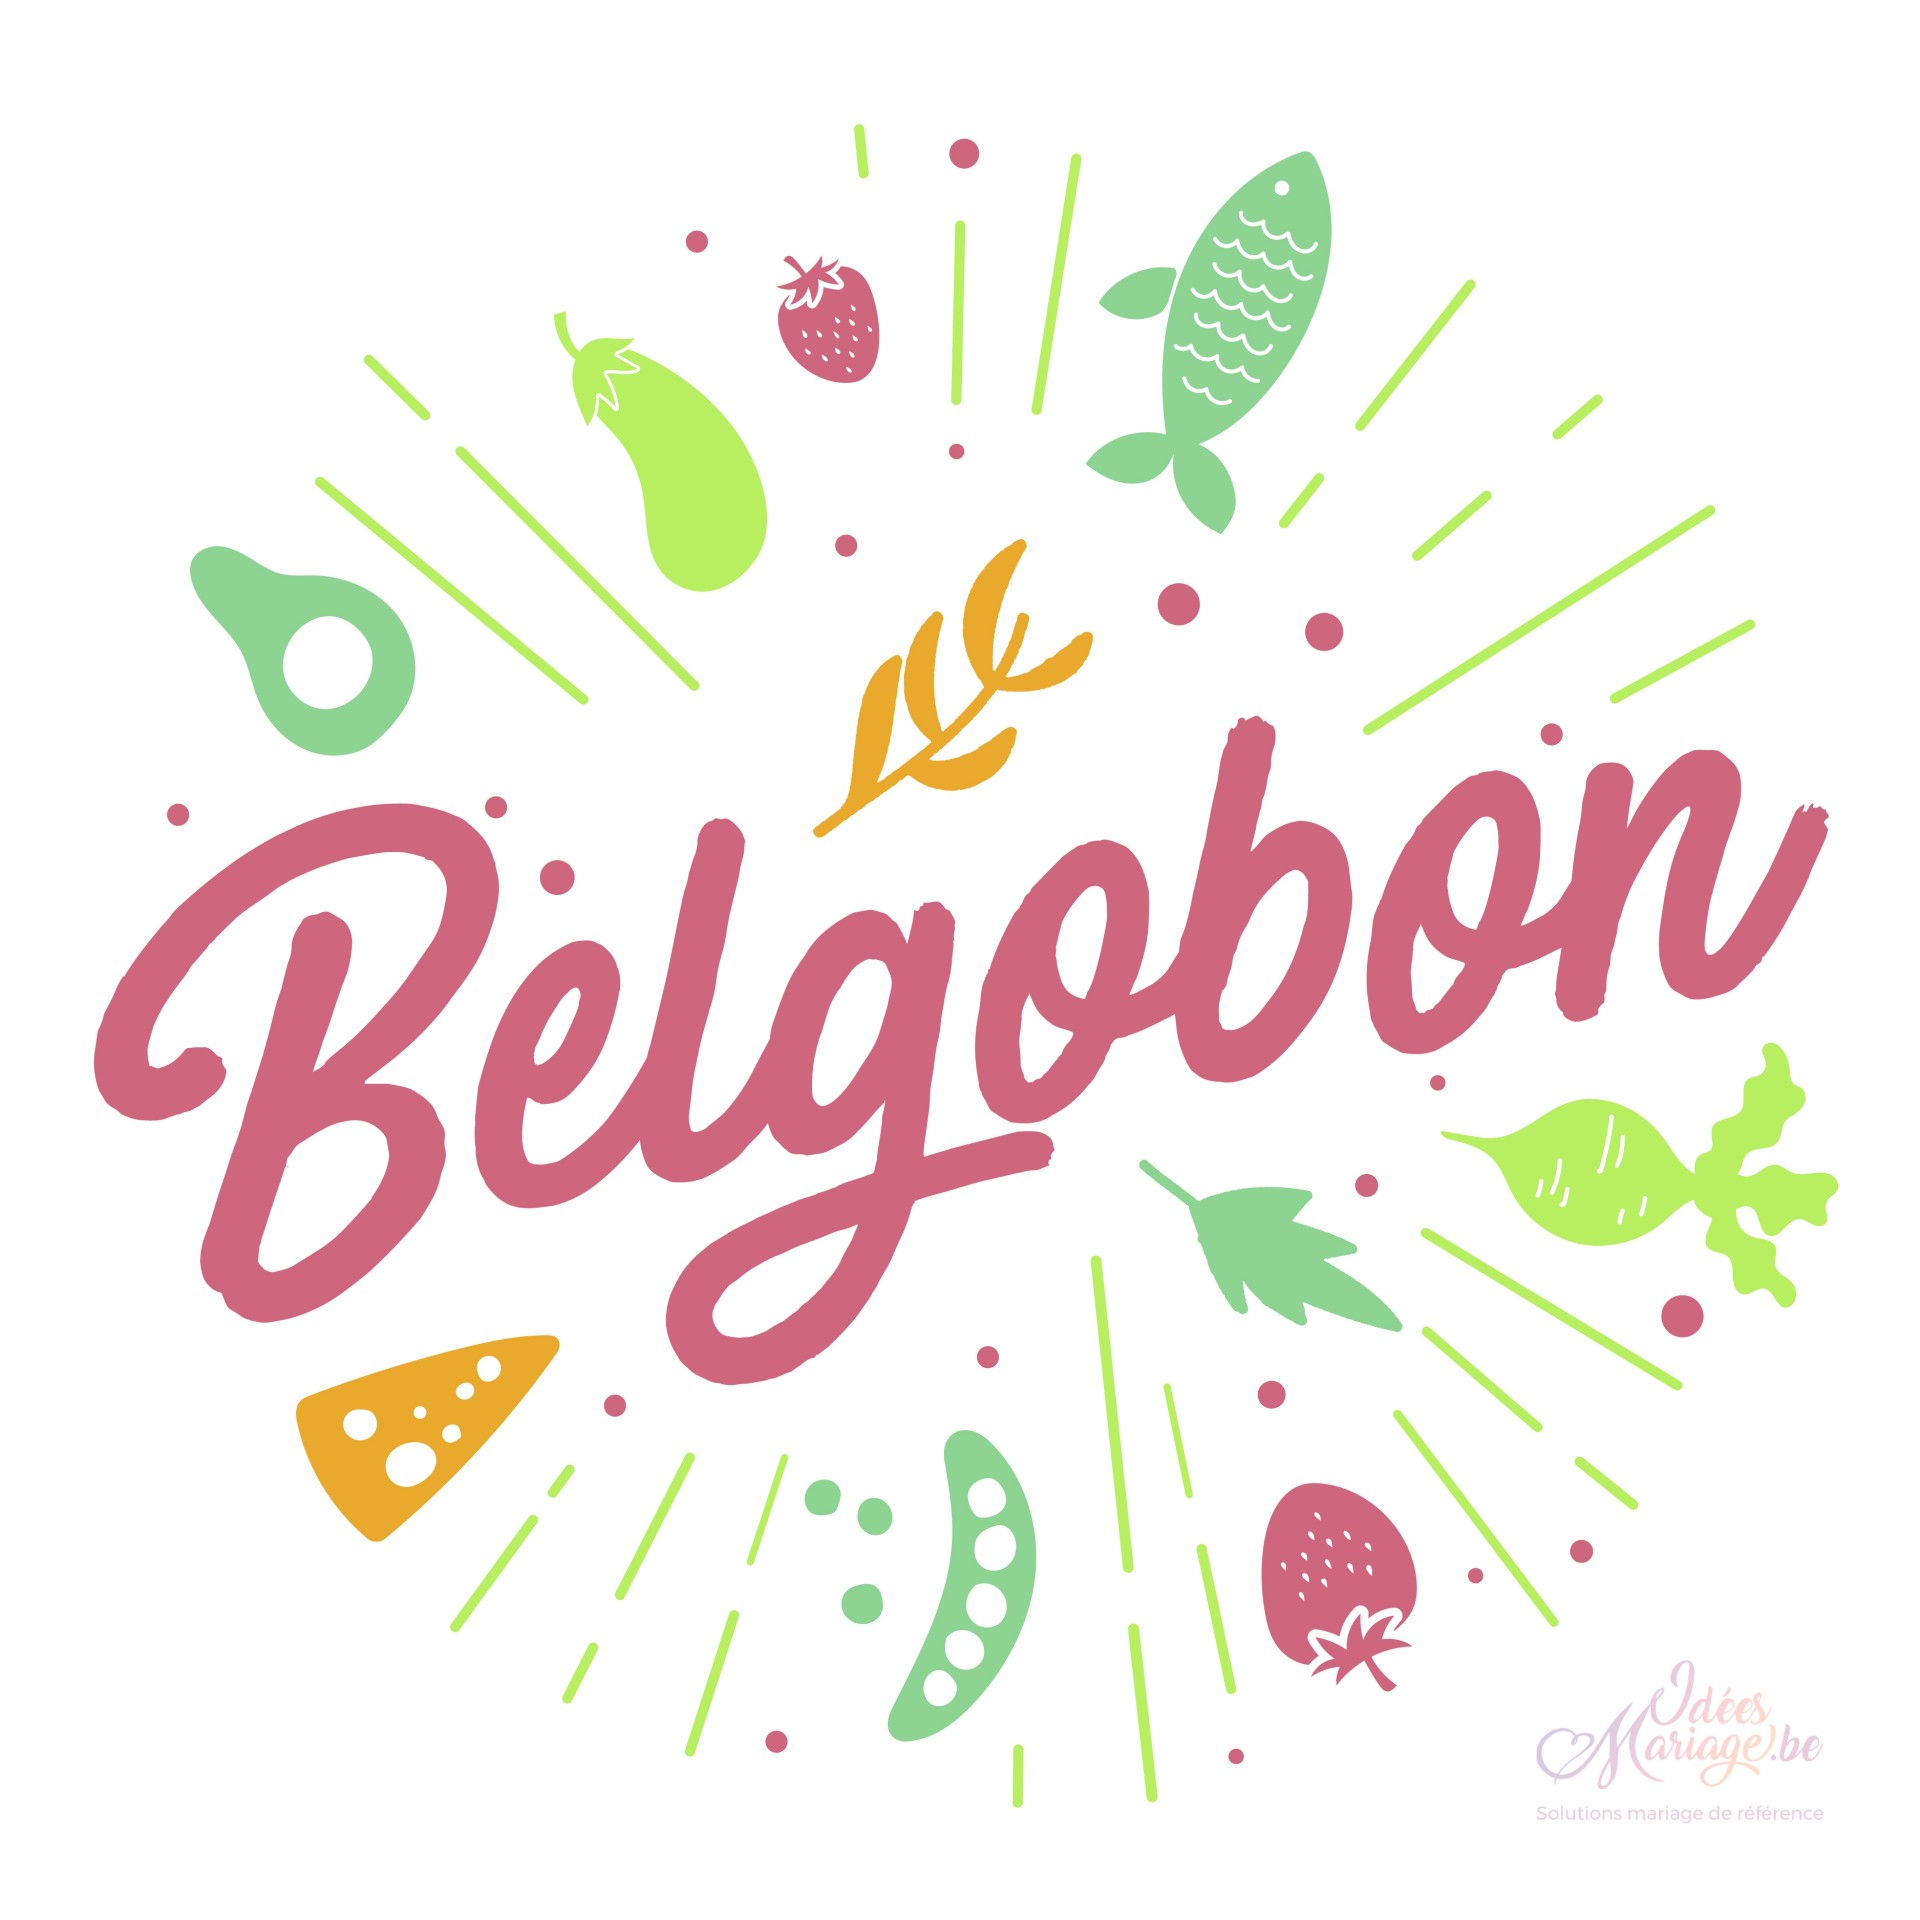 Belgobon